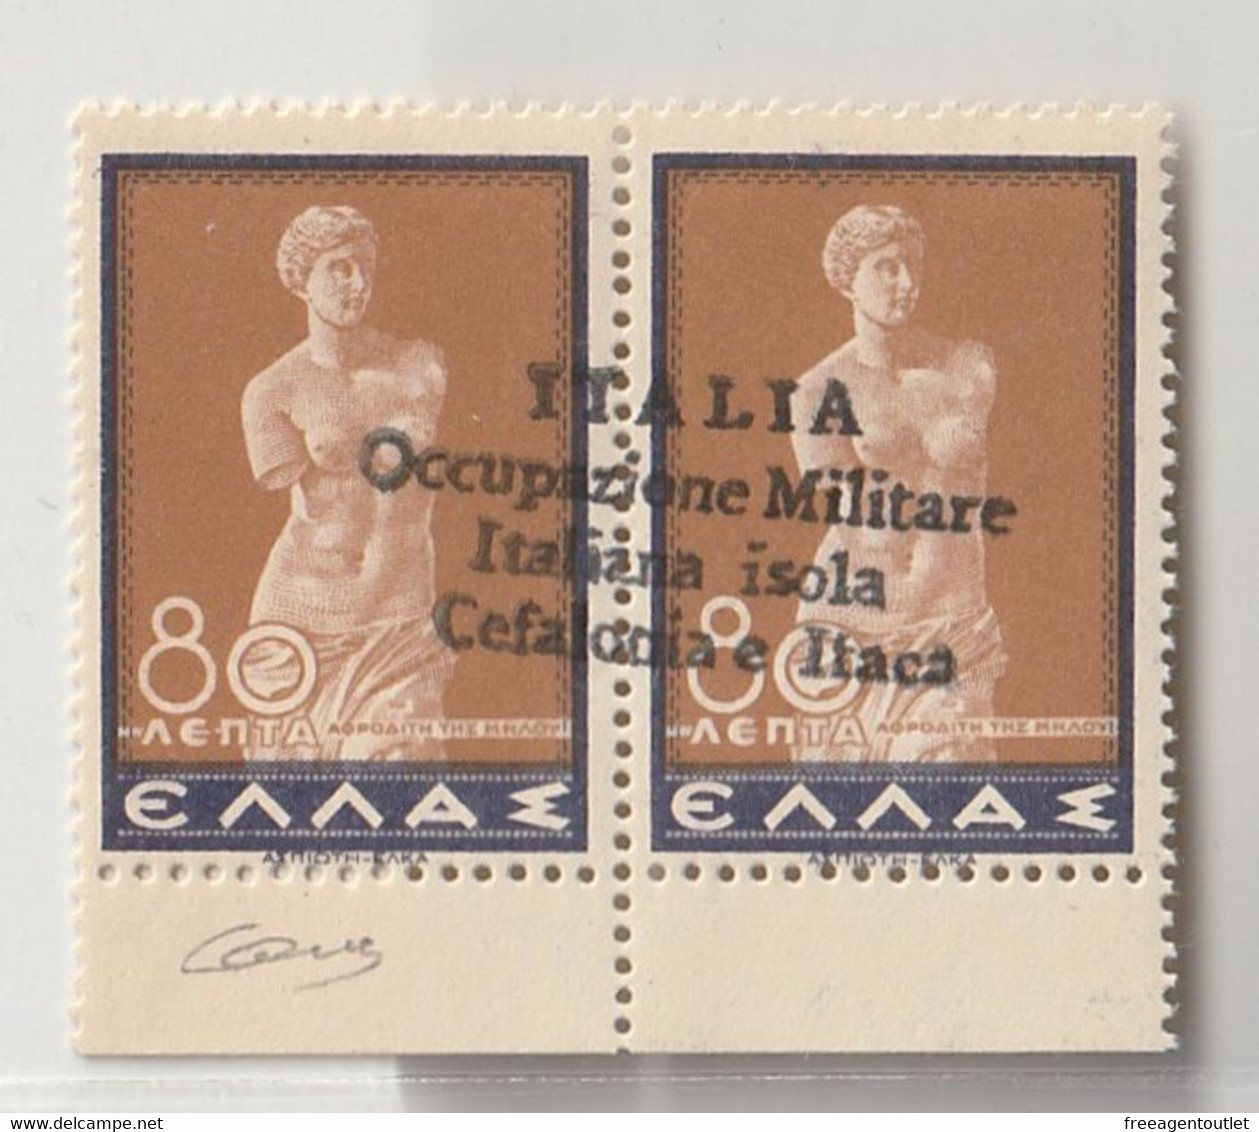 Cefalonia E Itaca - 1941 - 80 + 80 L. - Argostoli Issue - Hand Overprinted - MNH** - WW2 - Signed G. Oliva - CV = 5 300€ - Cefalonia & Itaca